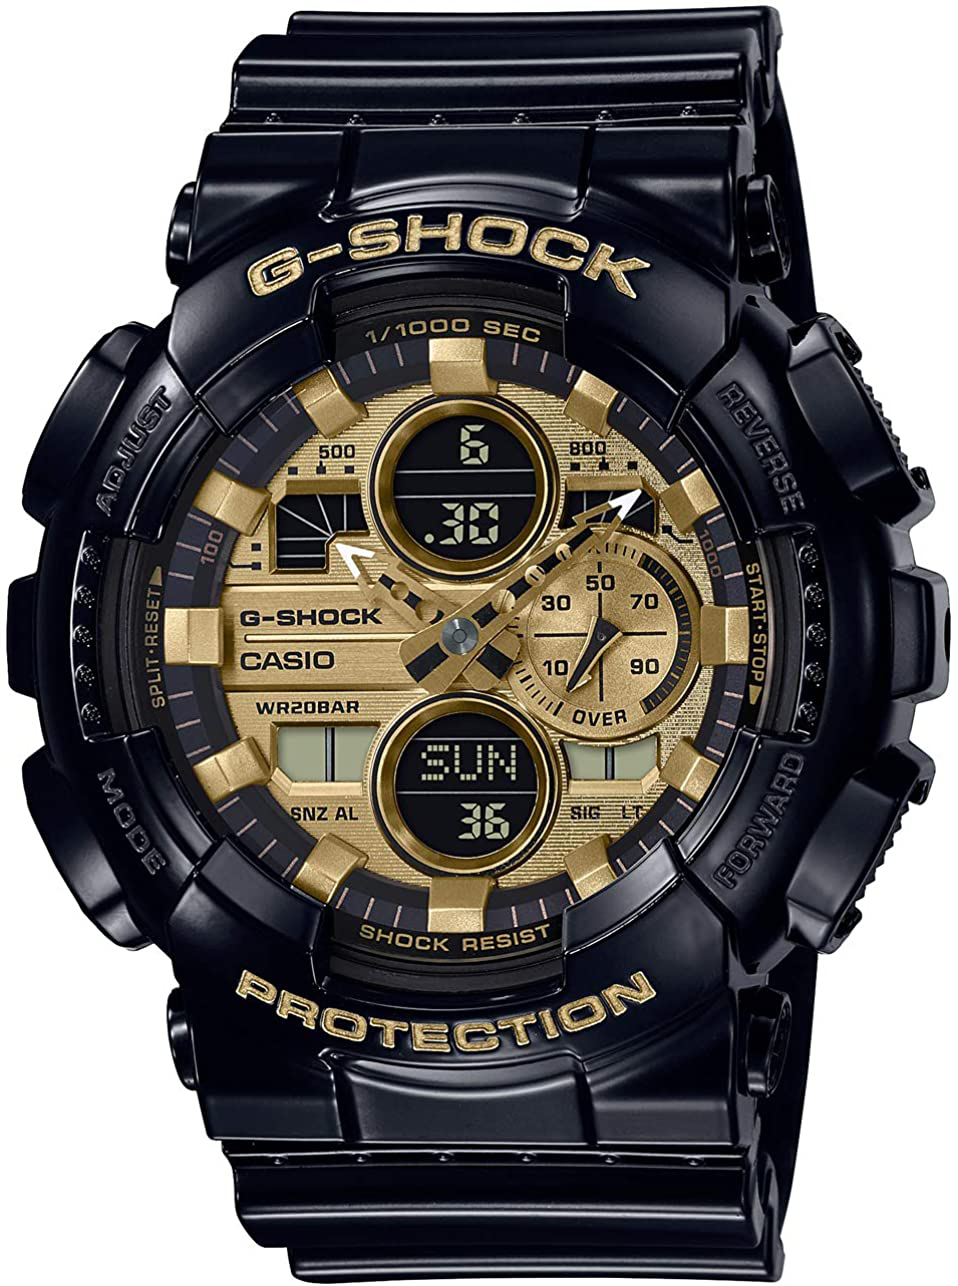 Men's Casio G-shock Analog-Digital Gold Dial Black Resin Strap Watch GA140GB-1A1